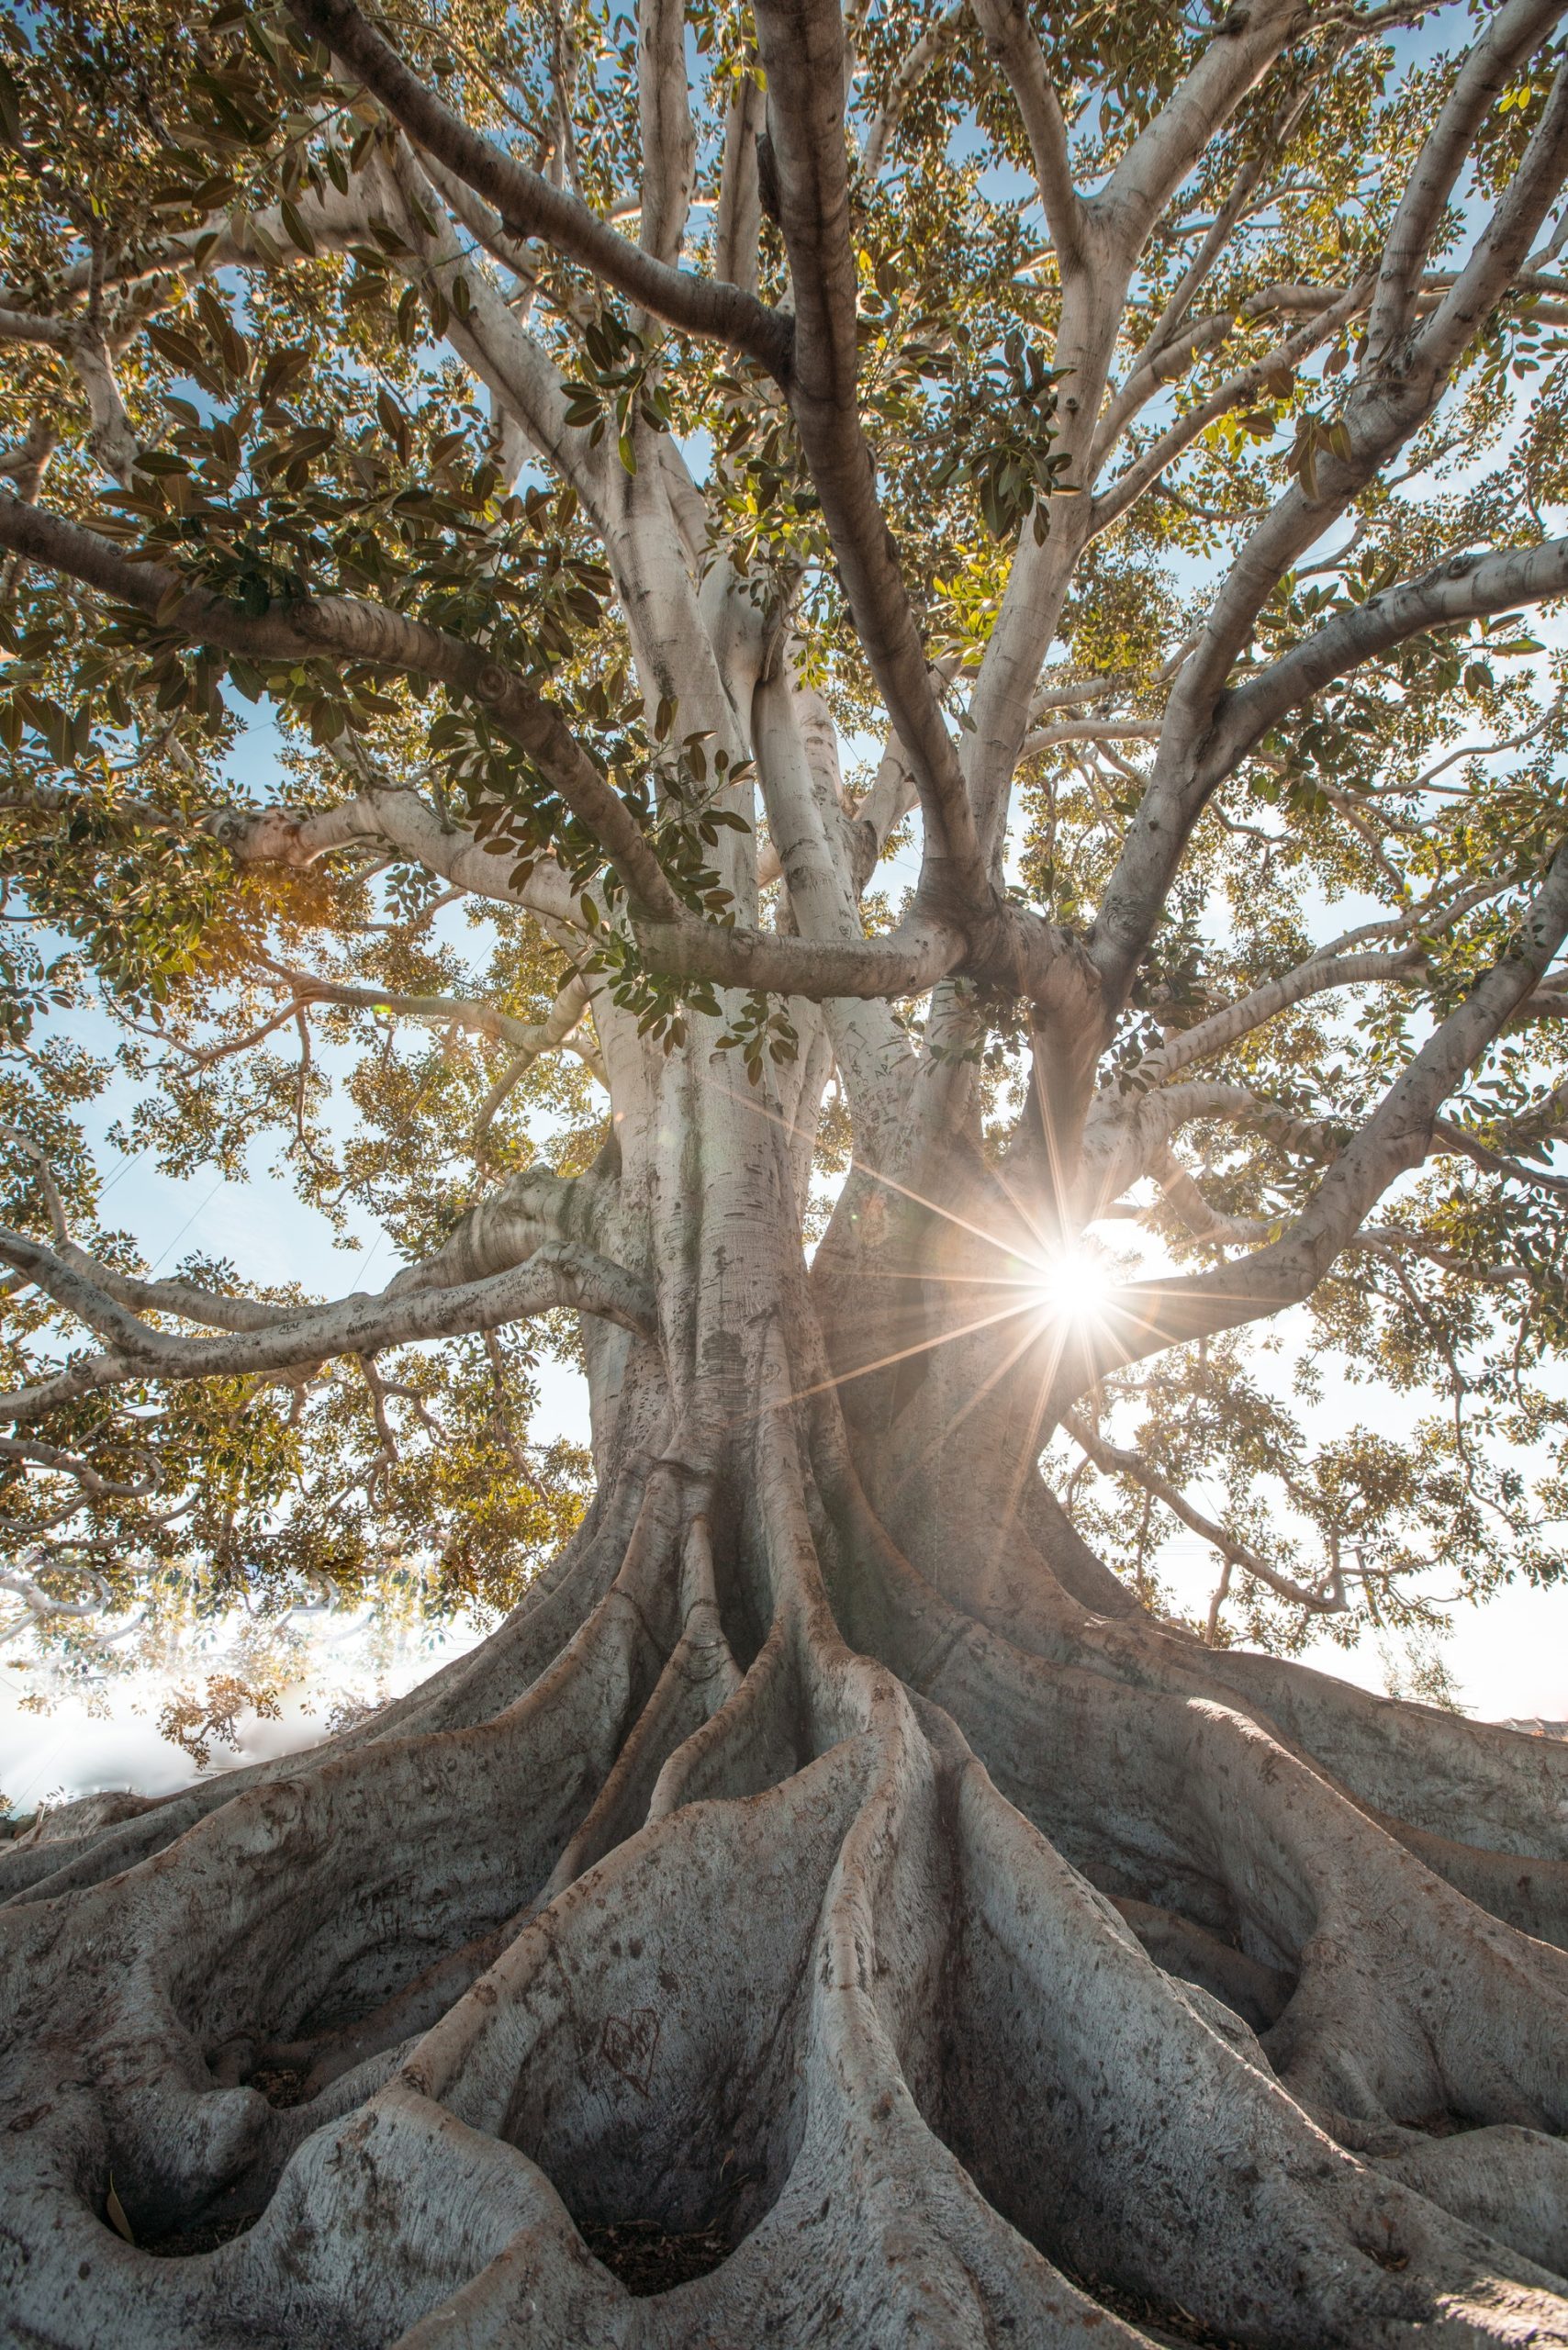 Revival Tree Shows Revival Process